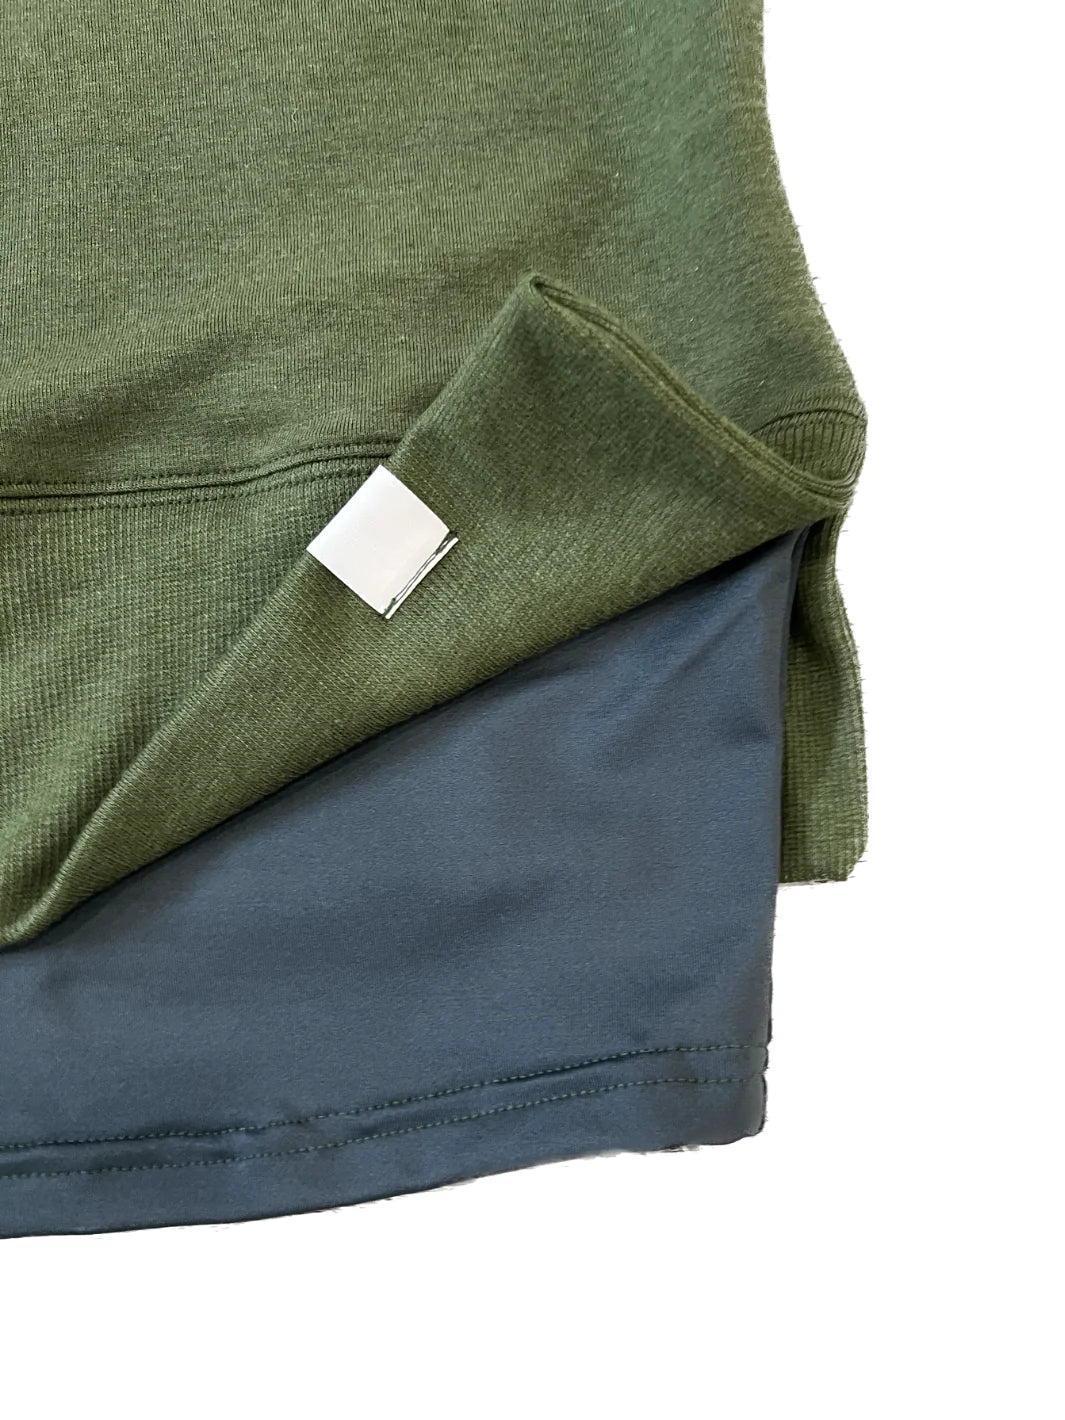 Moss Green Crewneck Sweater